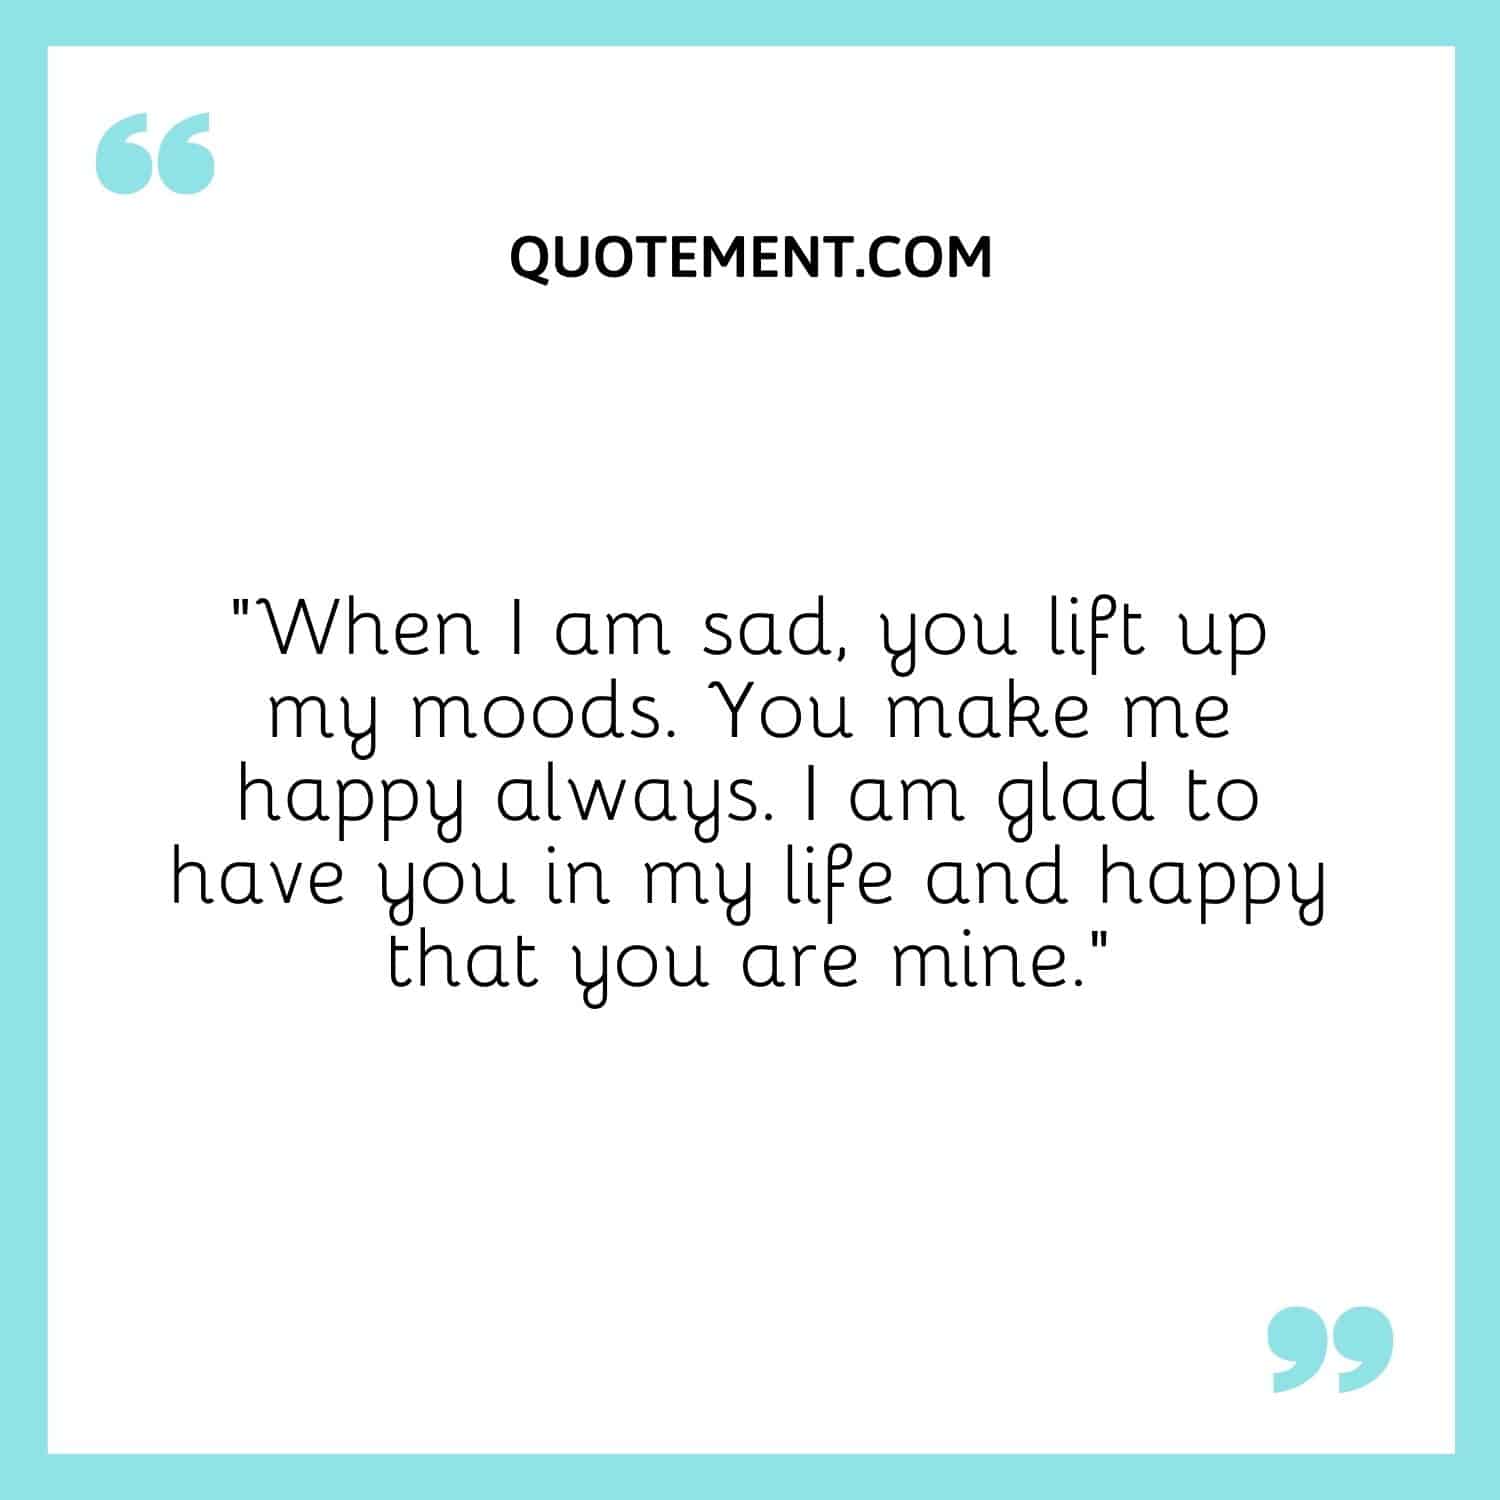 When I am sad, you lift up my moods